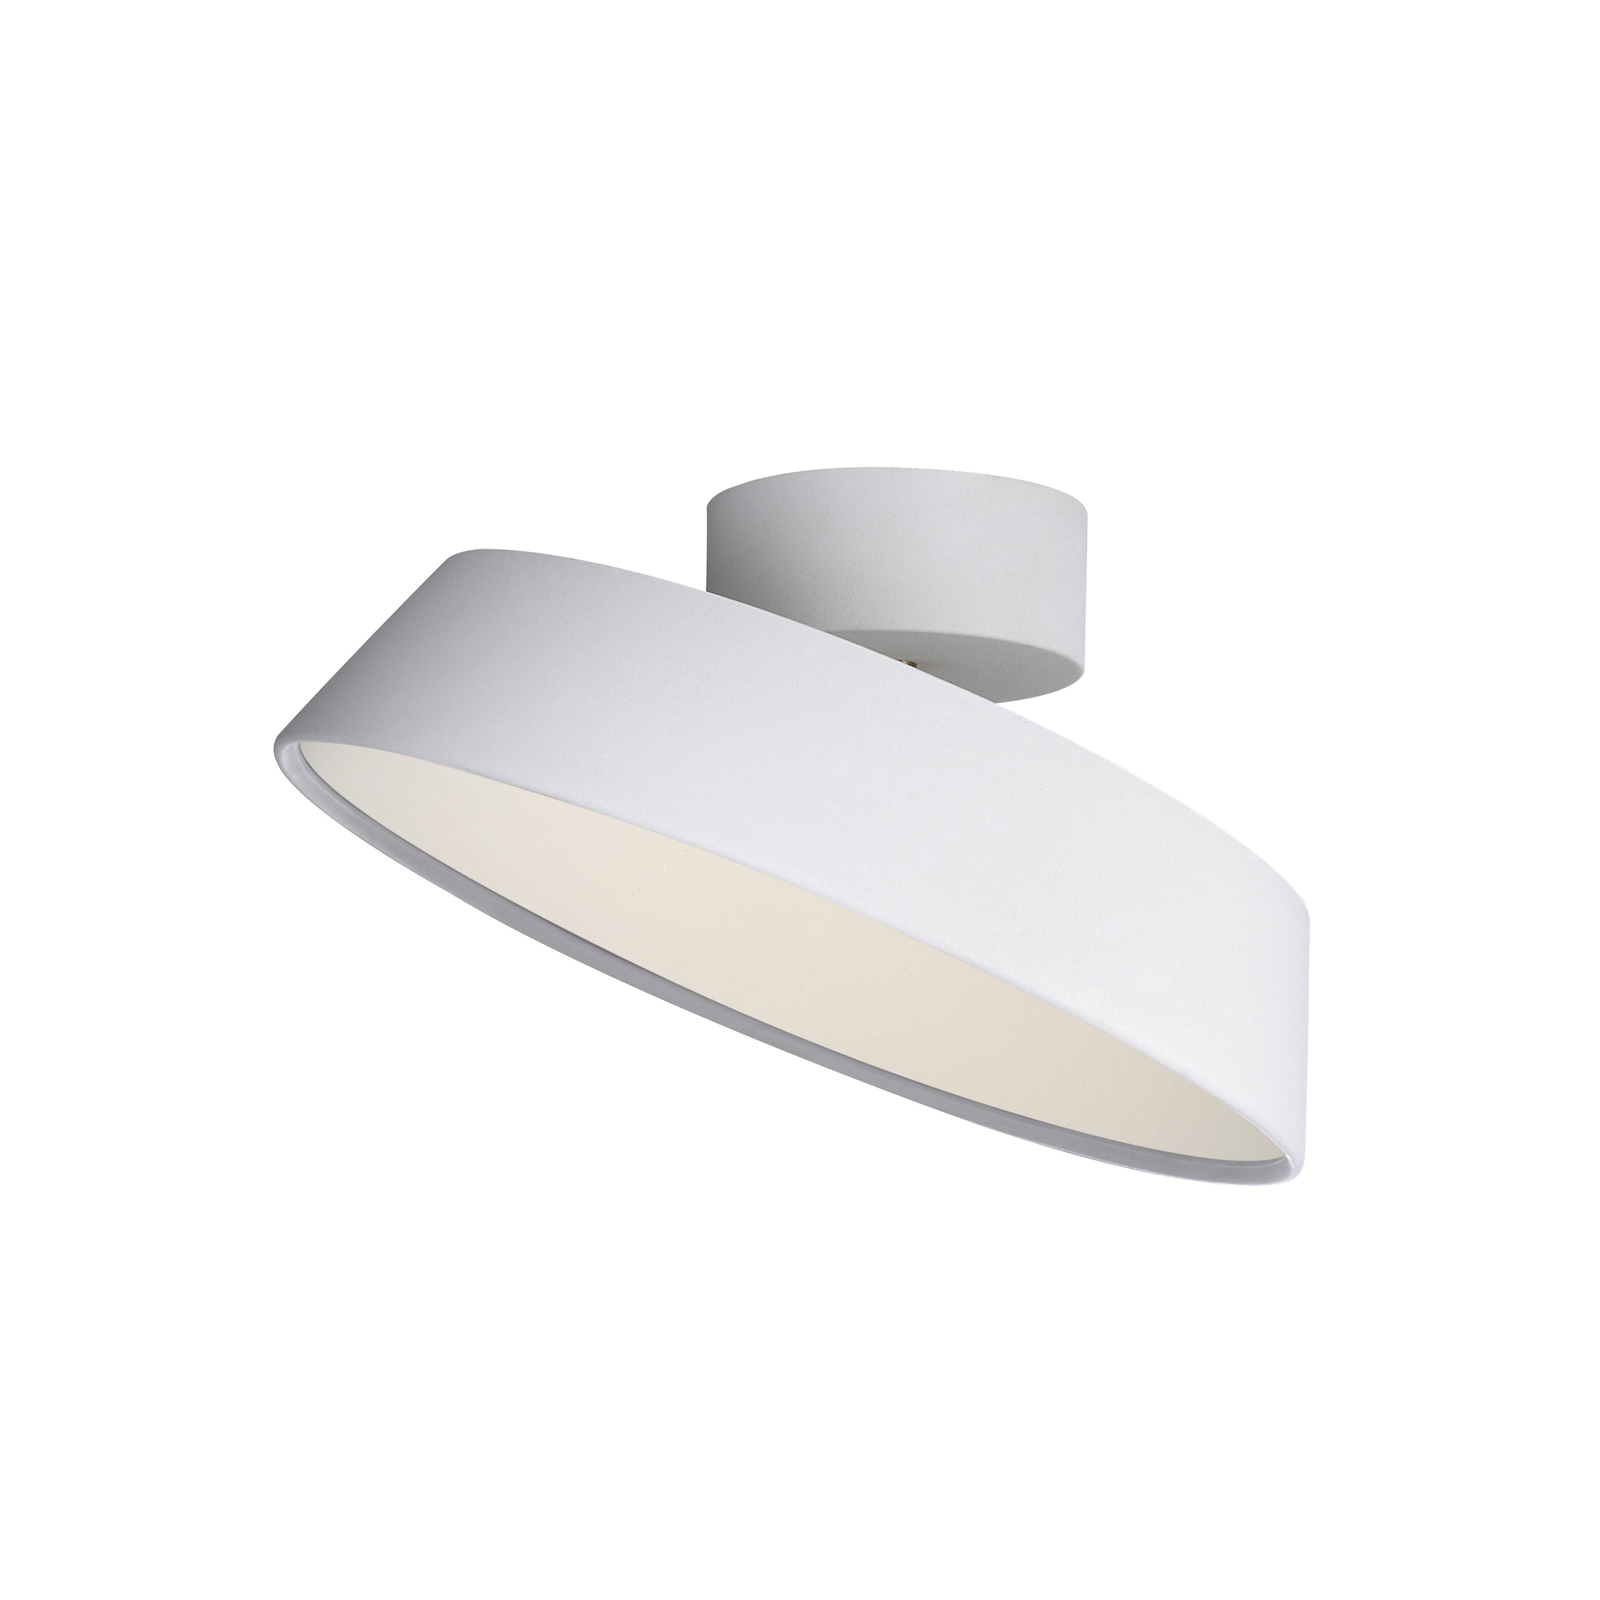 Plafonnier LED Kaito 2 Dim, blanc, Ø 30 cm, intensité variable